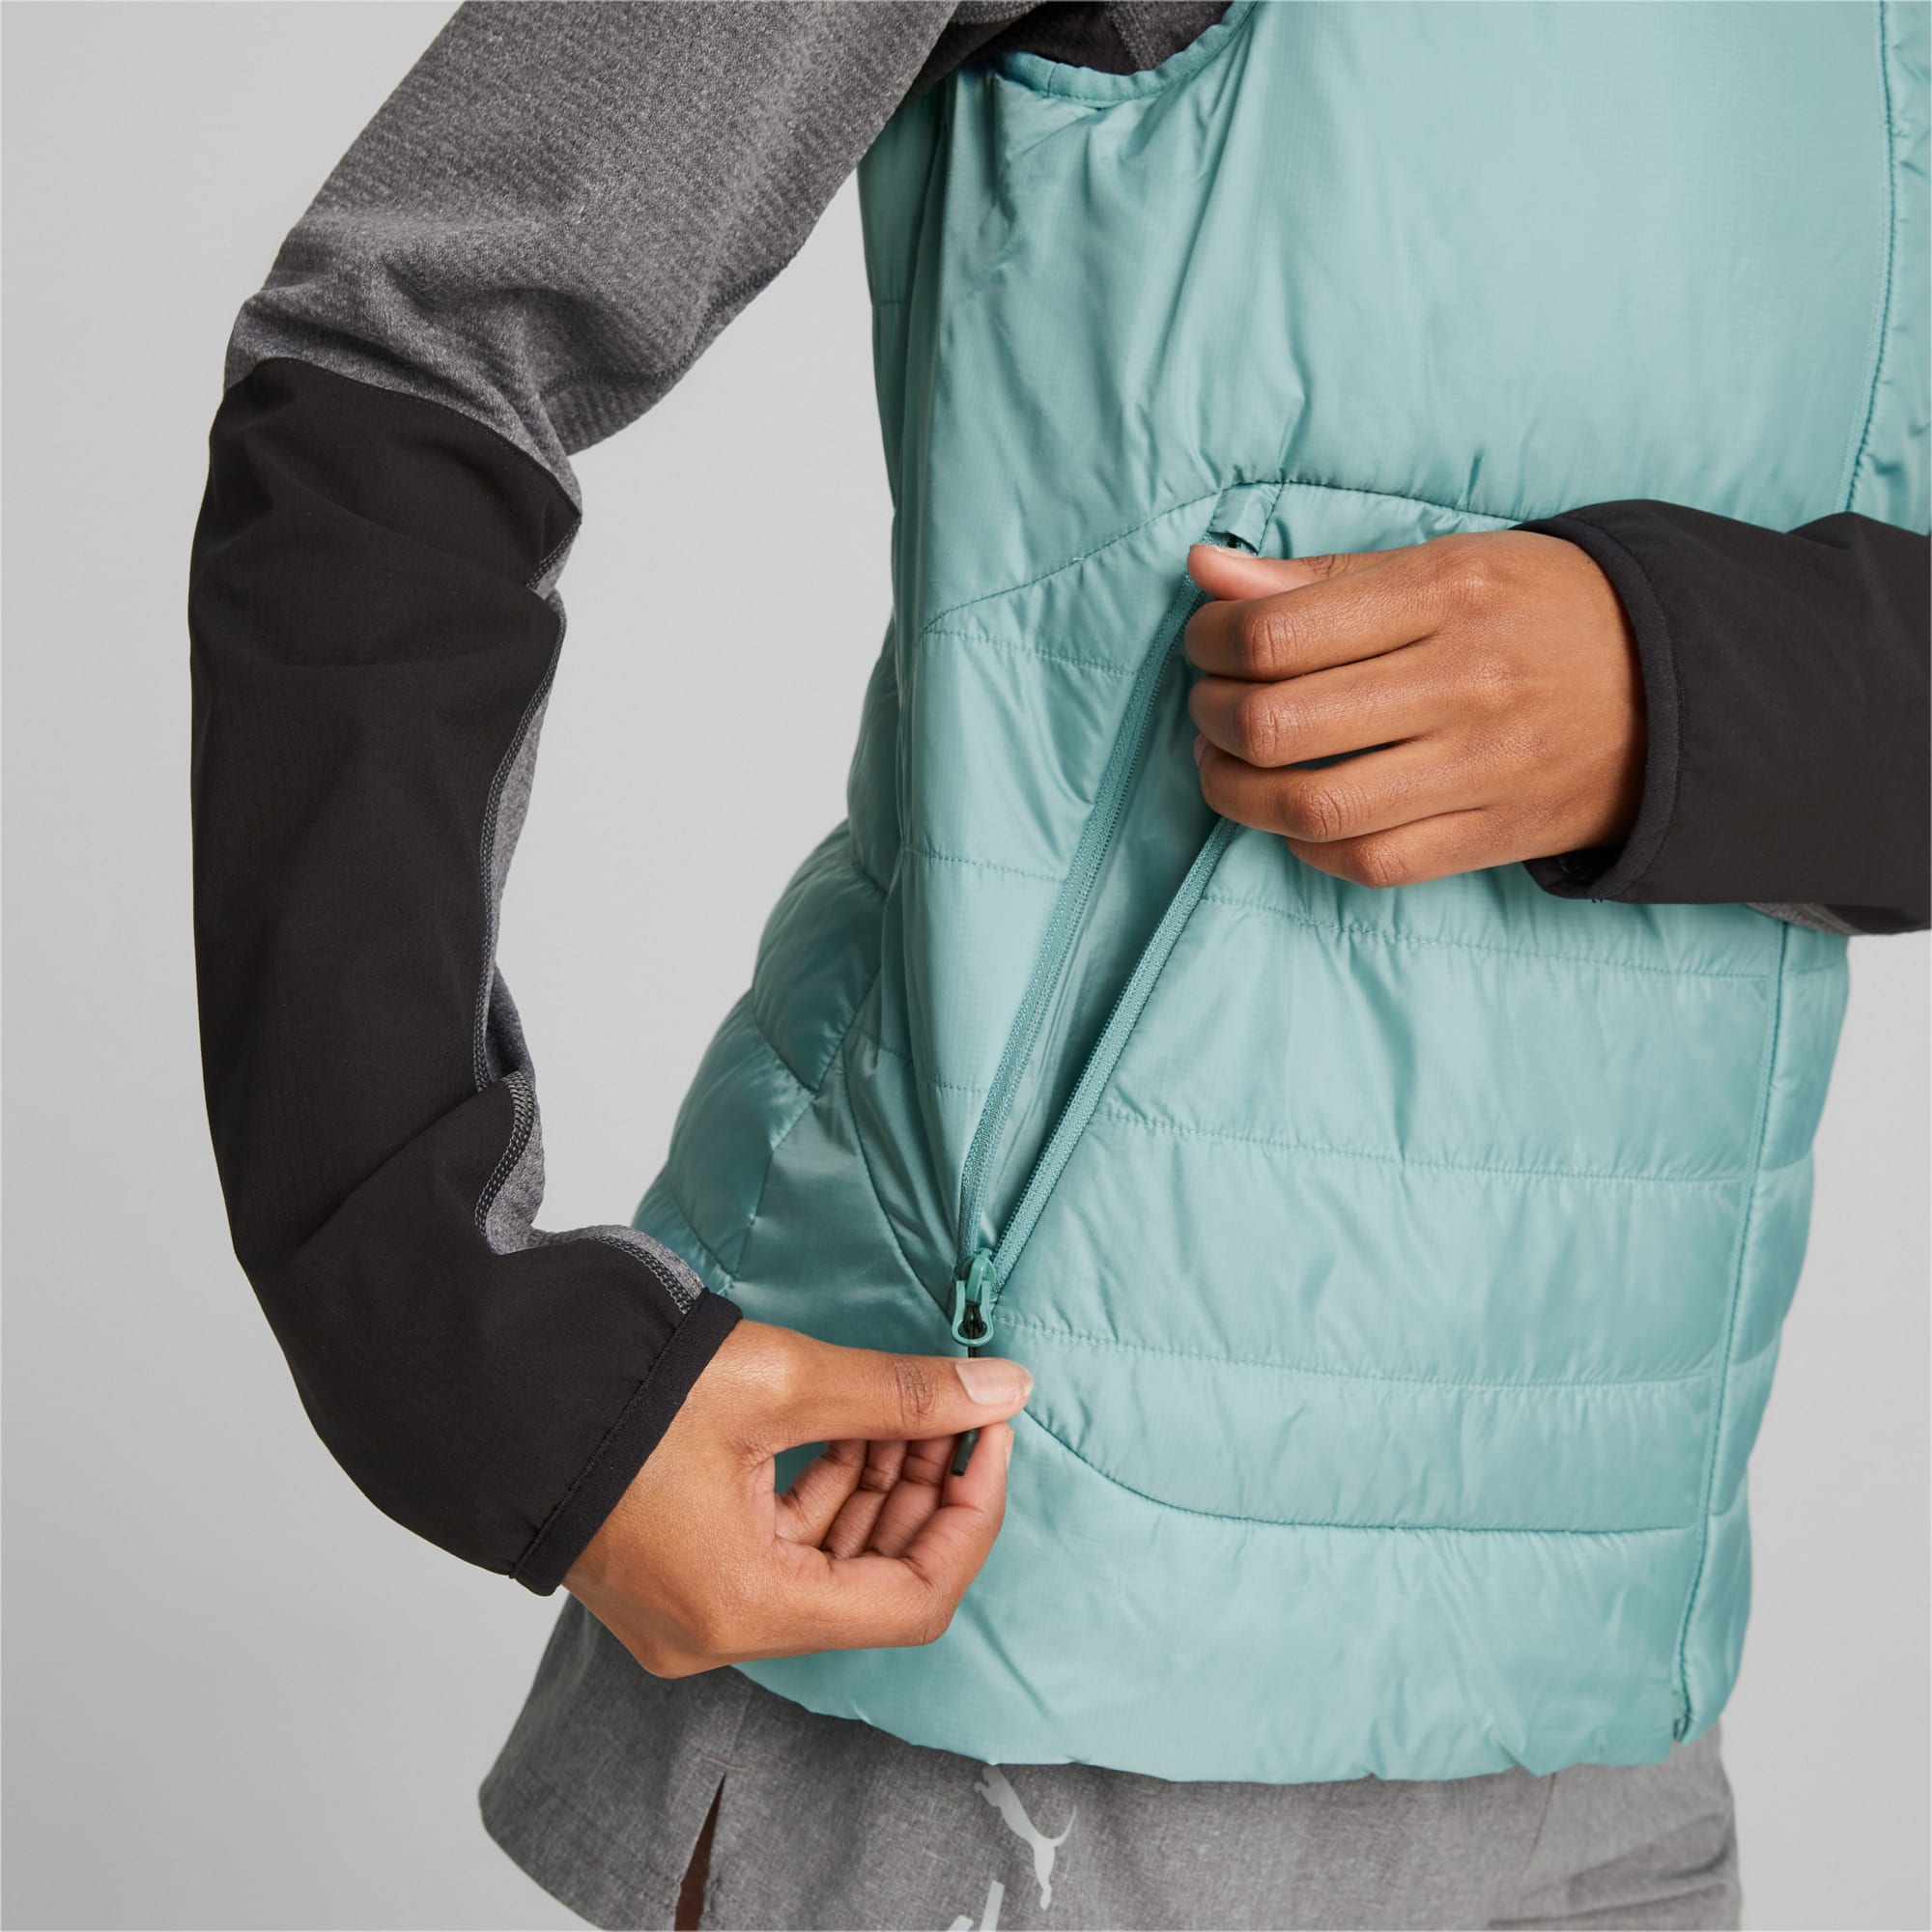 PUMA Seasons Reversible Primaloft Hiking Vest Women Women's Jacket, Adriatic, Size XS, Clothing